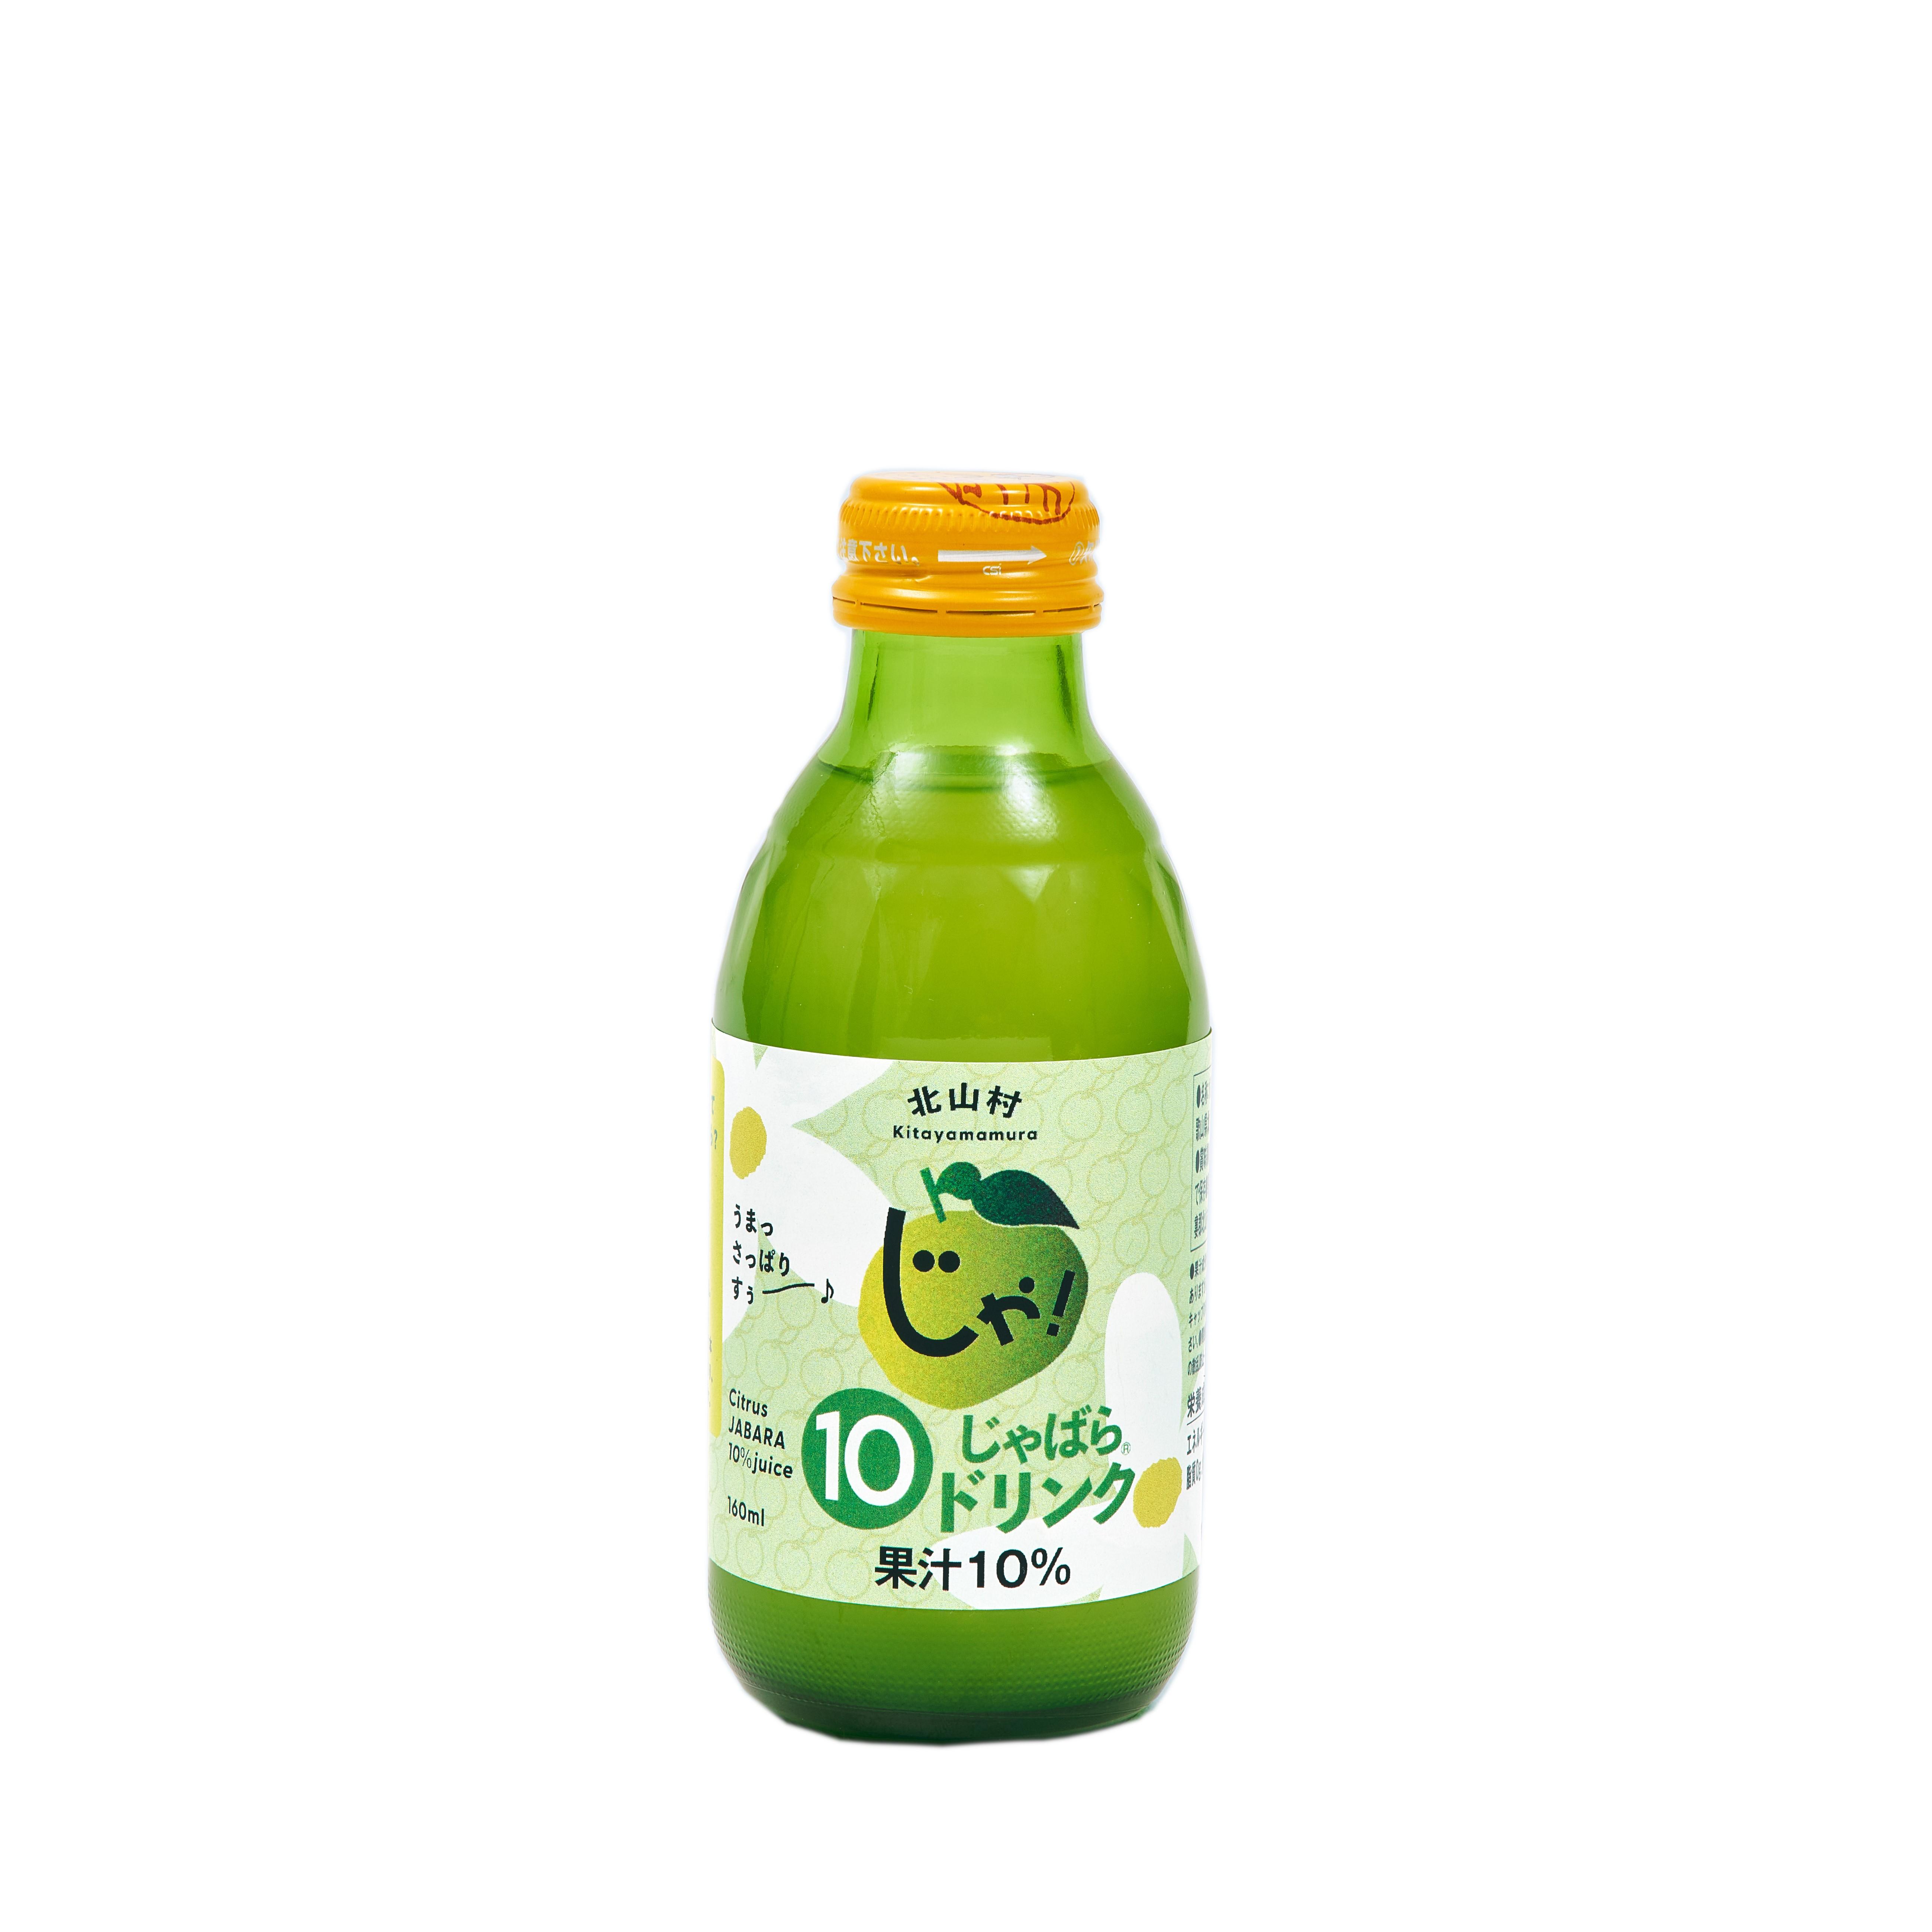 JABARA Citrus 10% drink 160ml